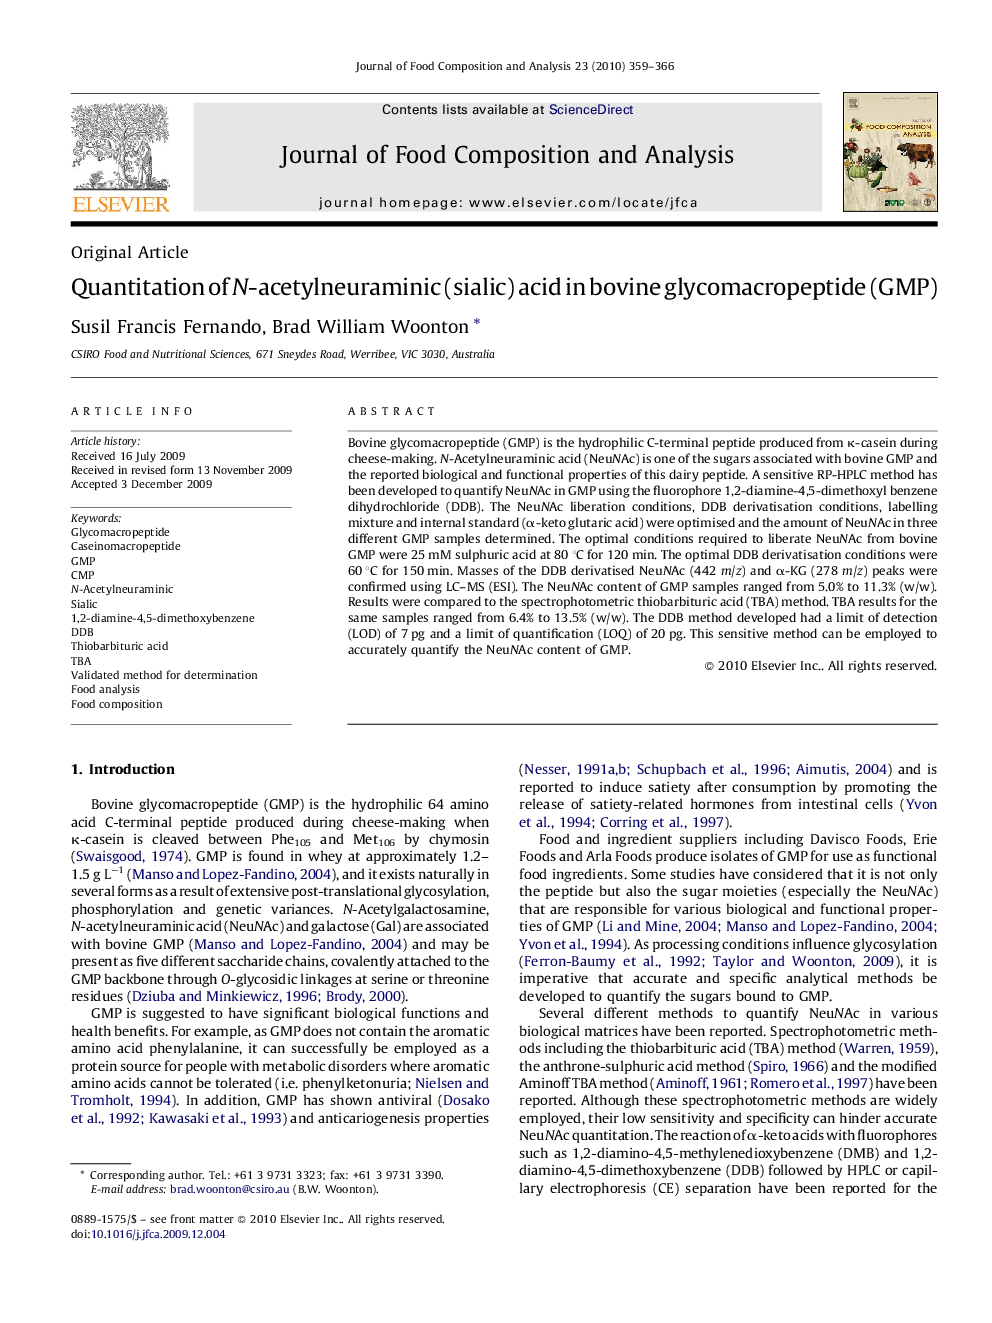 Quantitation of N-acetylneuraminic (sialic) acid in bovine glycomacropeptide (GMP)